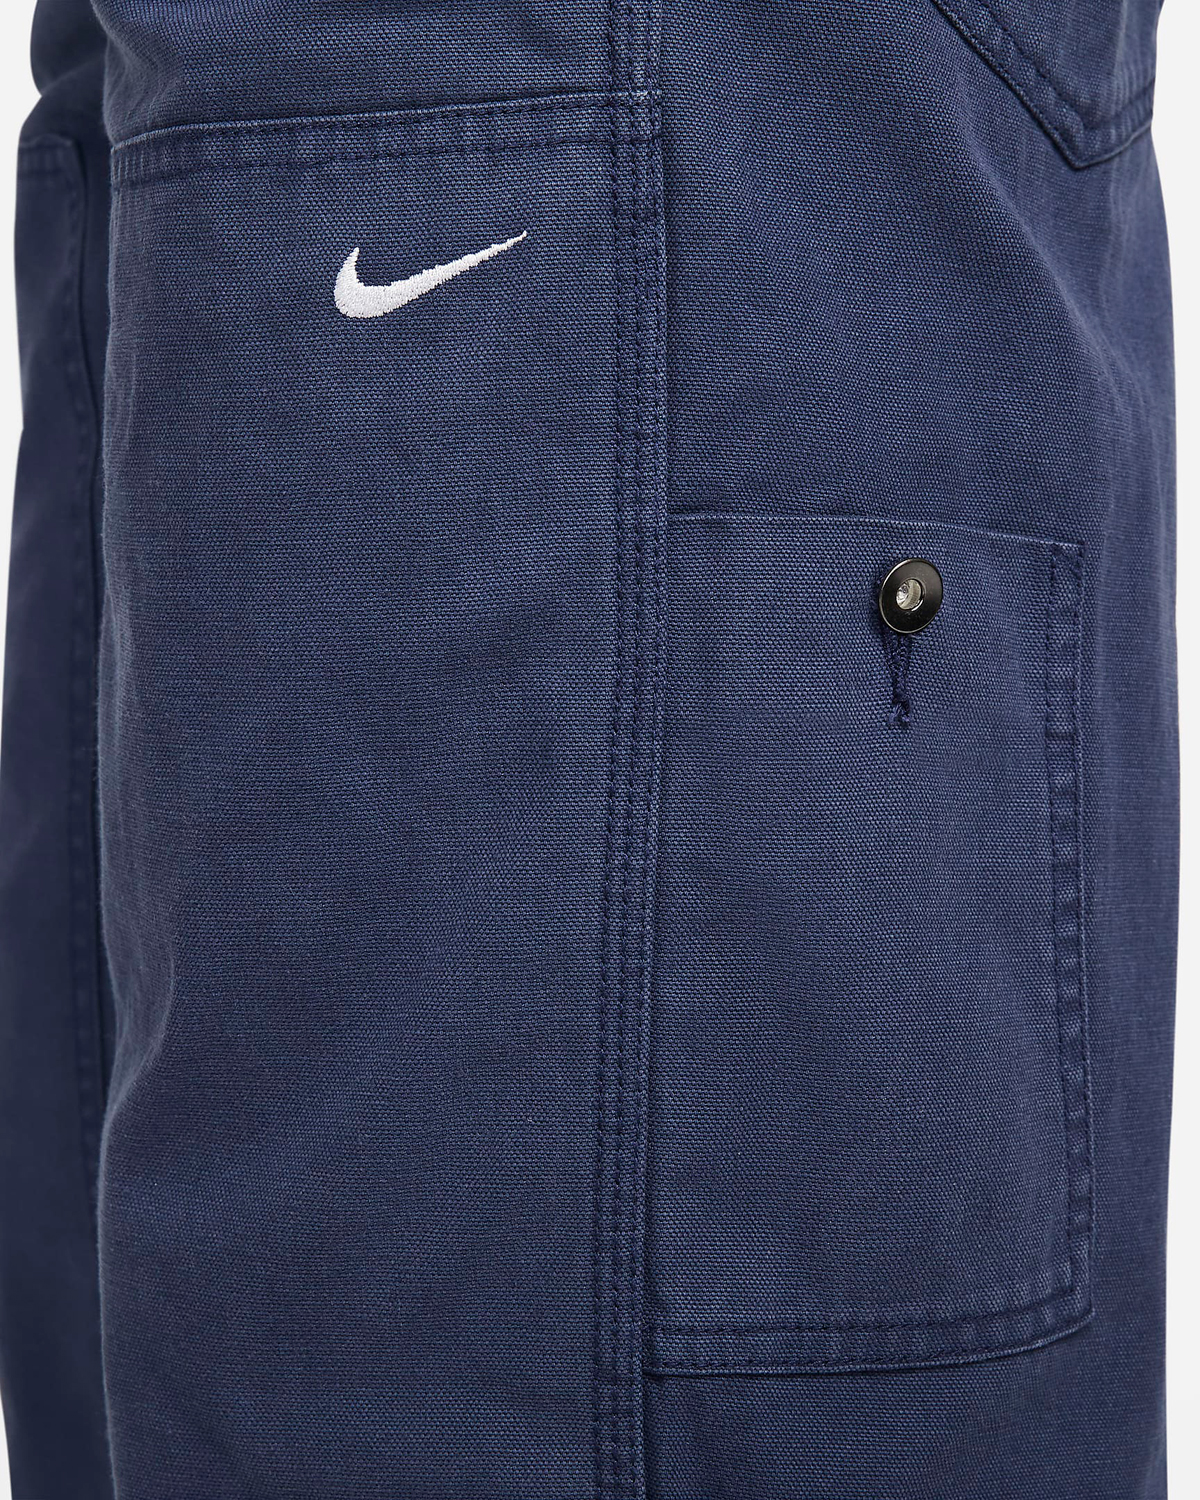 Nike-Sportswear-Double-Panel-Pants-Midnight-Navy-2